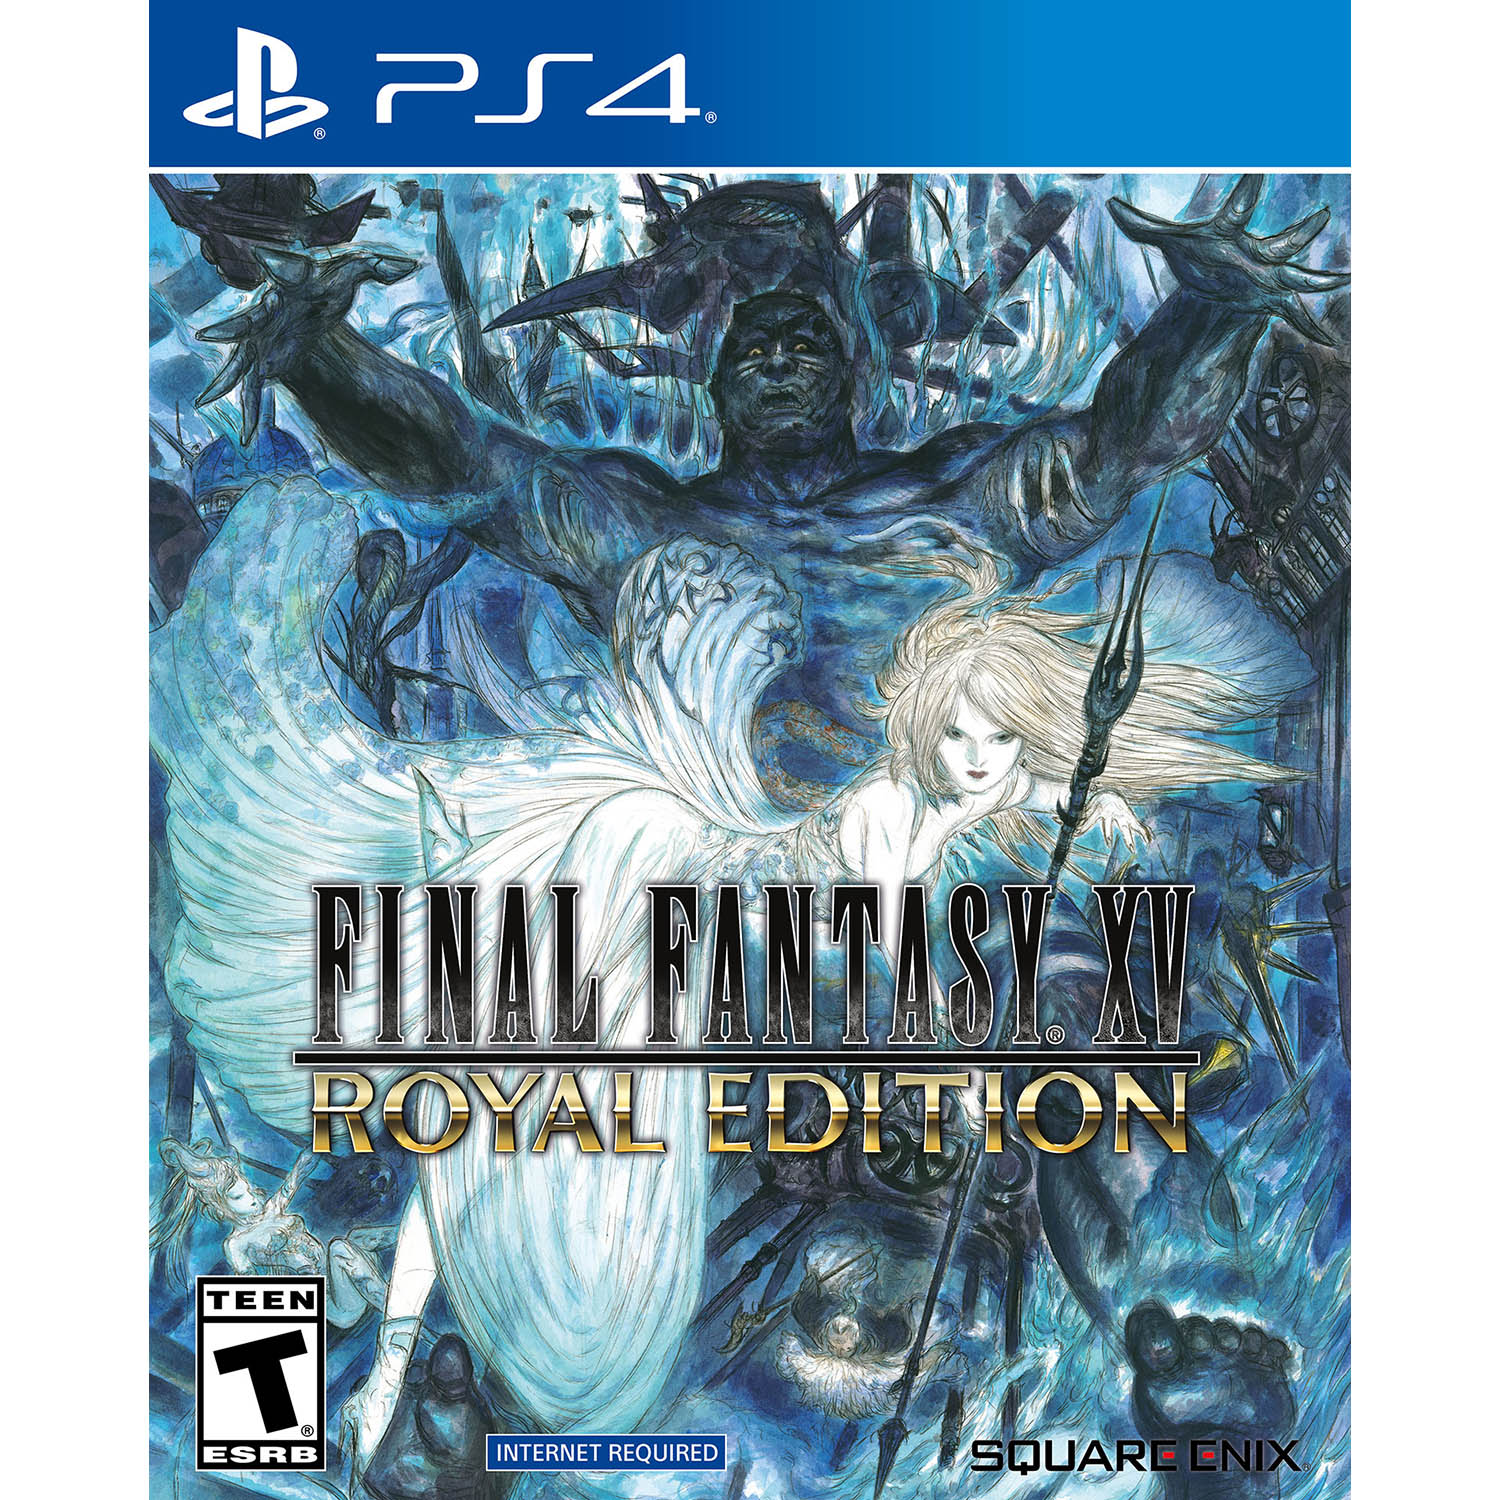 Final Fantasy XV Royal Edition, Square Enix, PlayStation 4, [Physical], 662248920764 - image 1 of 13